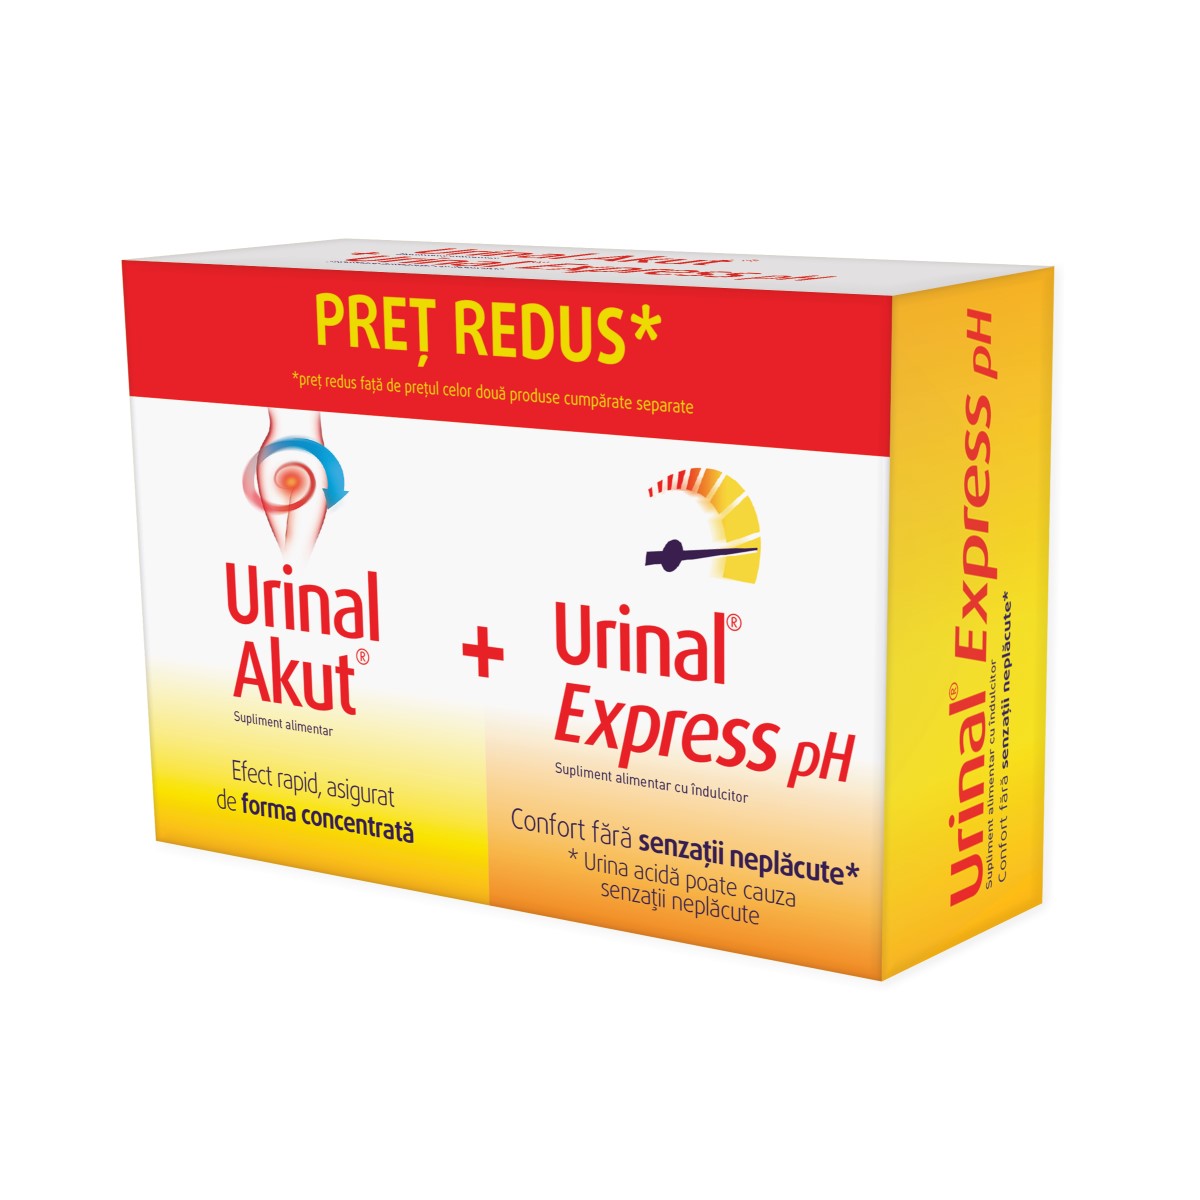 Urinal Akut Idelyn, 10 tablete + Urinal Express pH, 6 plicuri, Walmark